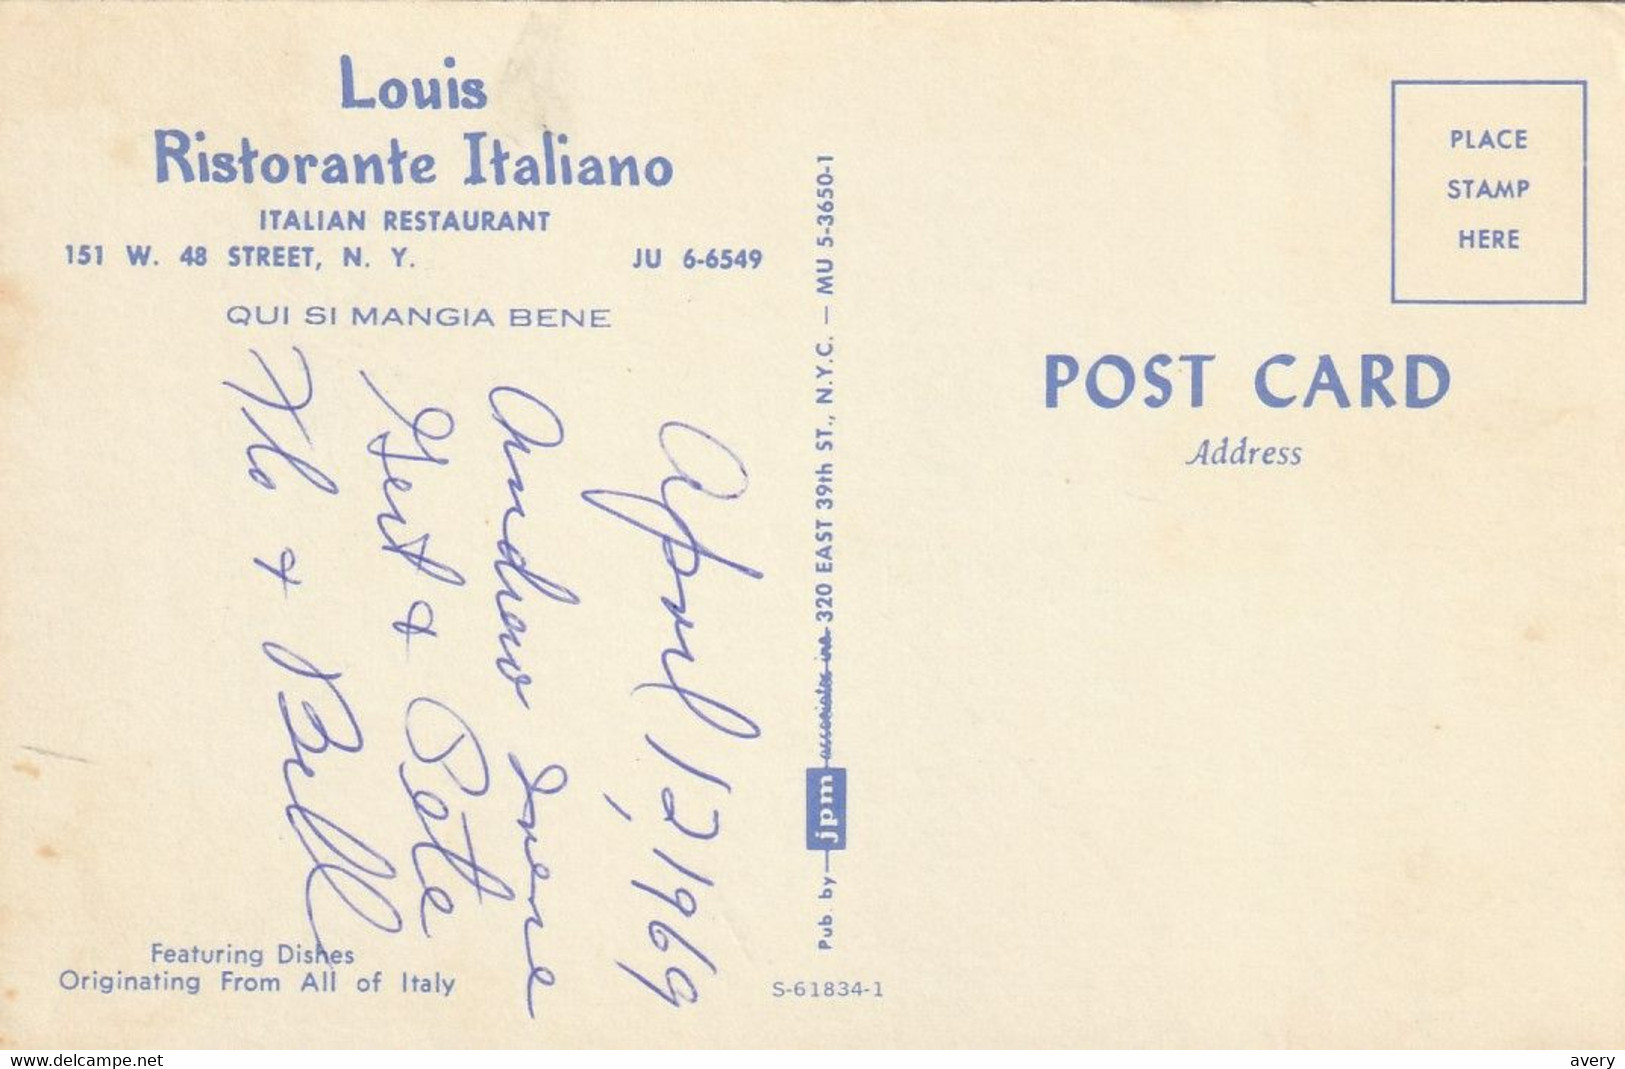 Louis Ristorante Italiano, Italian Restaurant 151 W. 48 Street New York City  Qui Si Mangia Bene - Bars, Hotels & Restaurants